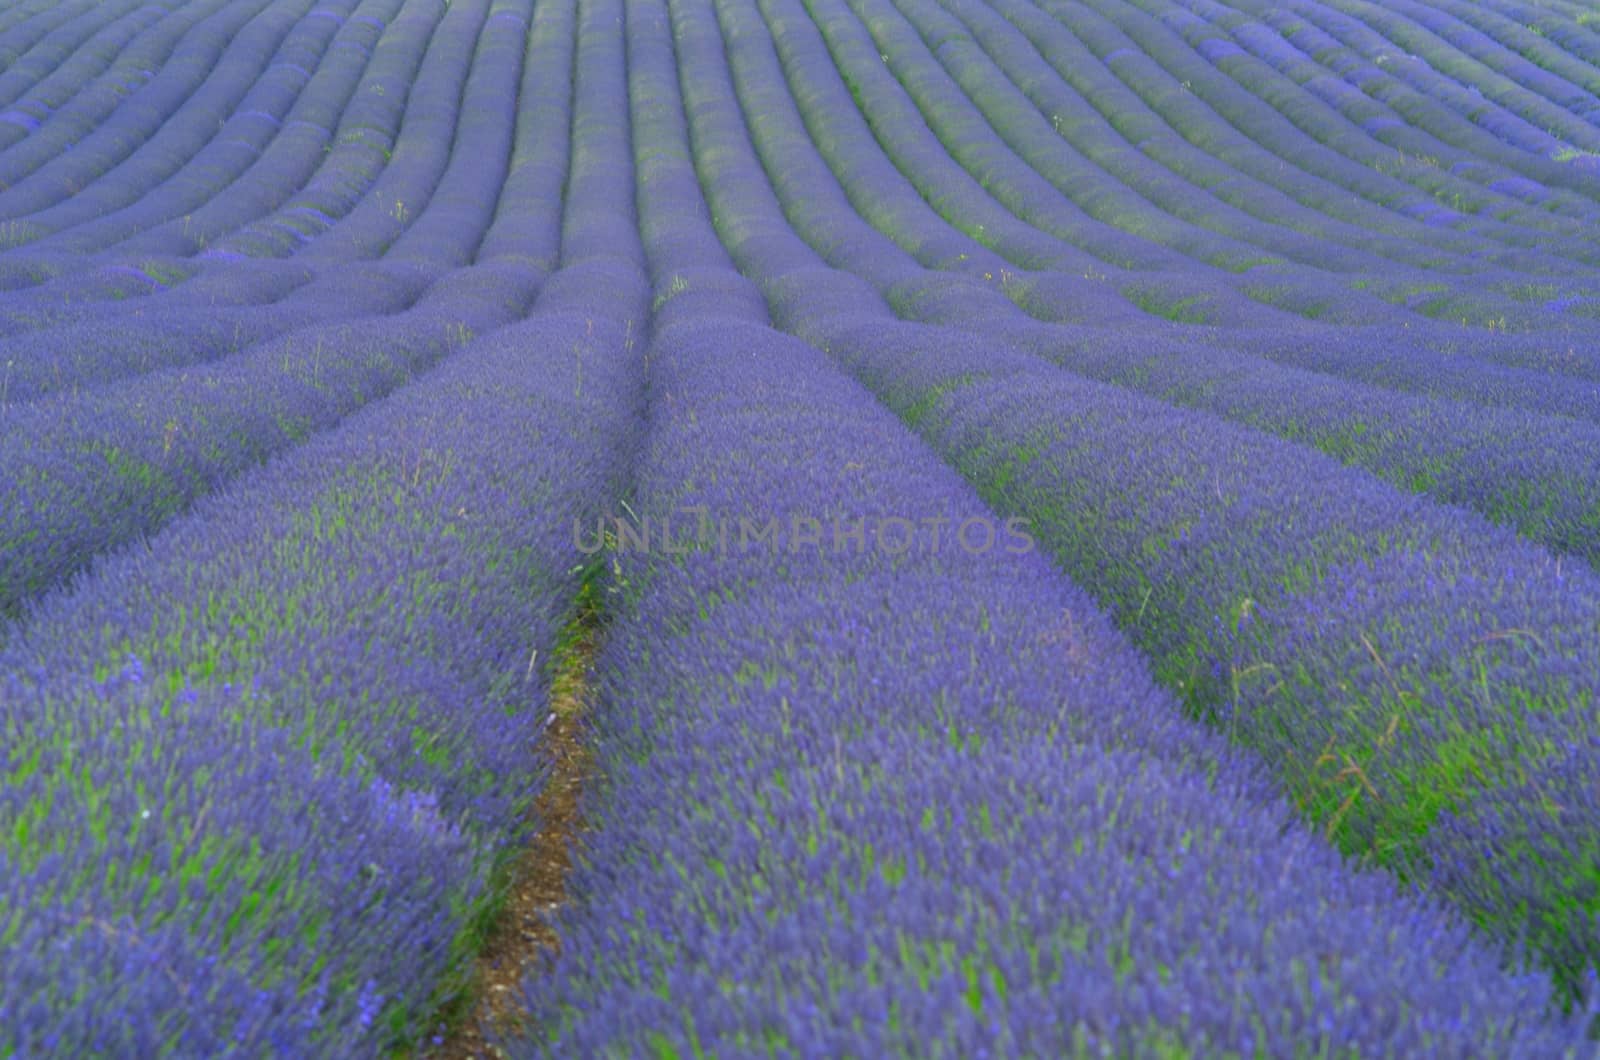 Rows of purple Lavender